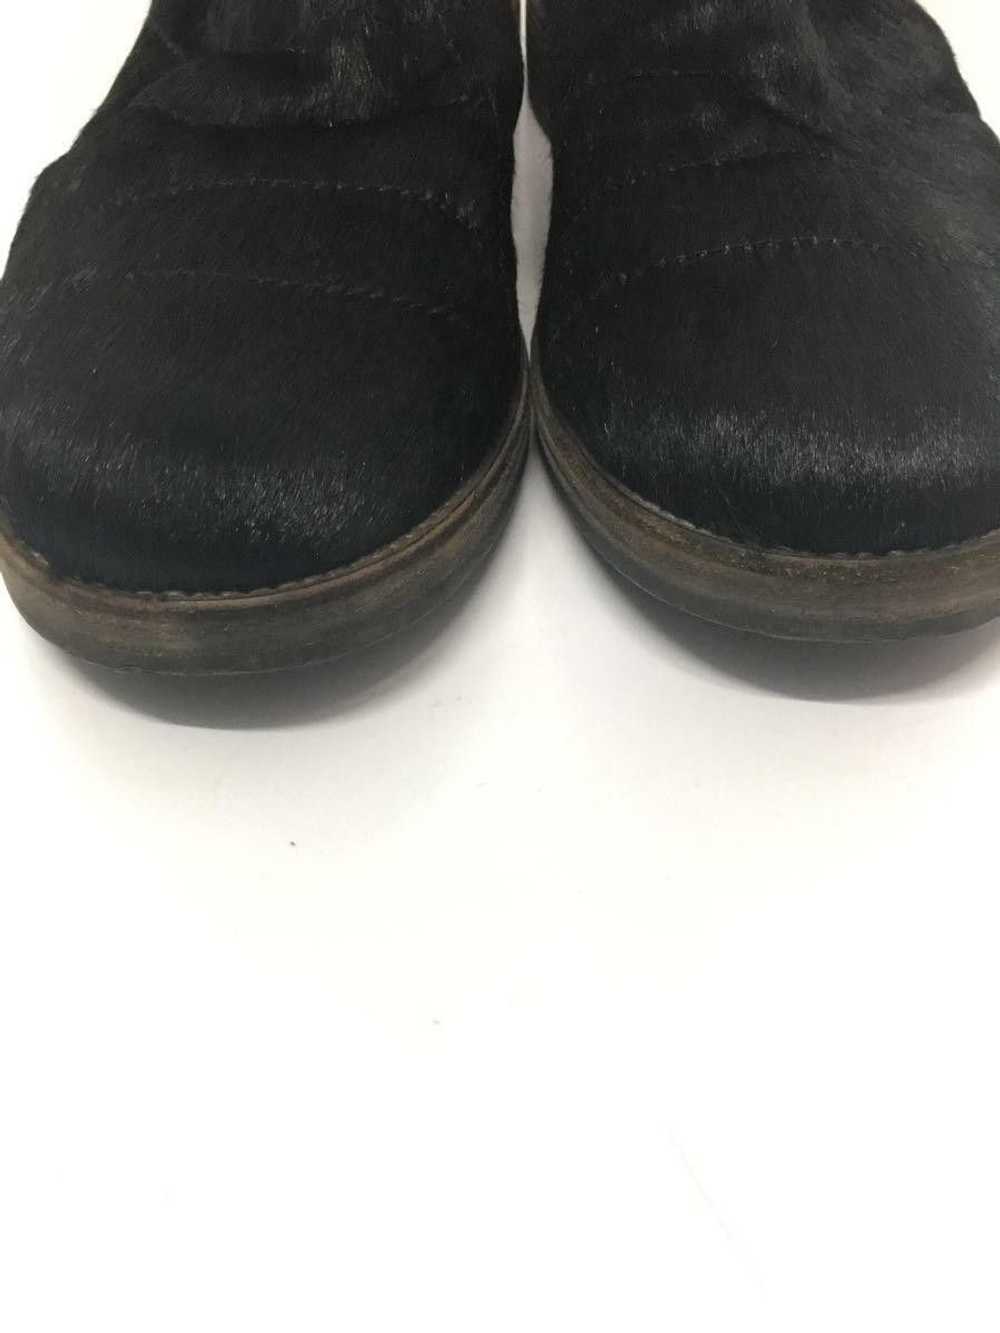 Maison Margiela Black Quilted Fur Boots - image 6